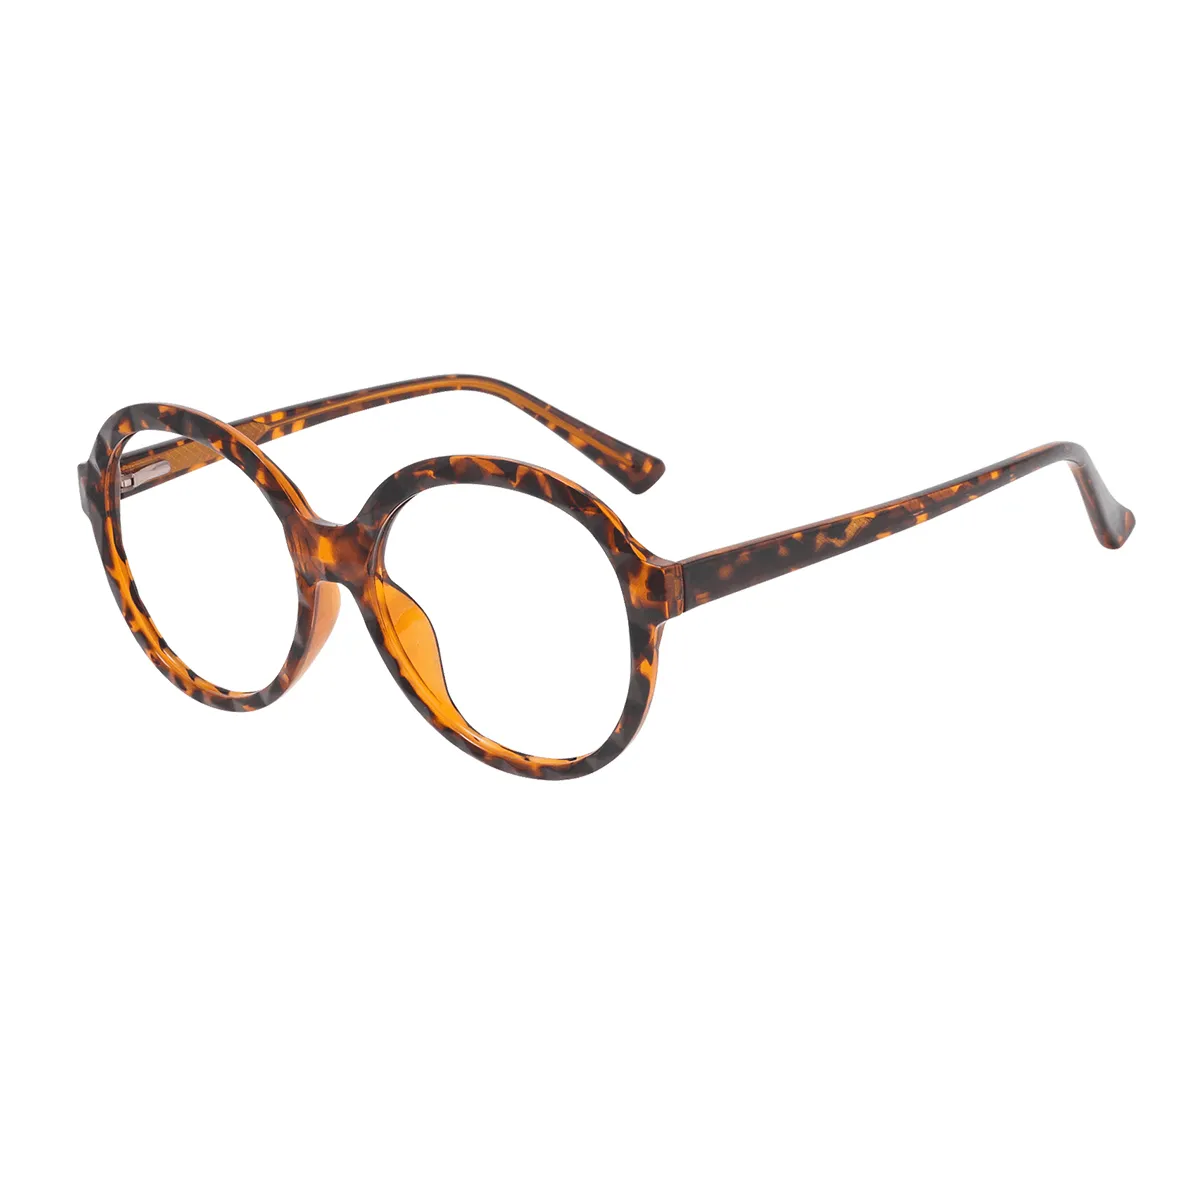 Ezra - Round Tortoiseshell Glasses for Women - EFE